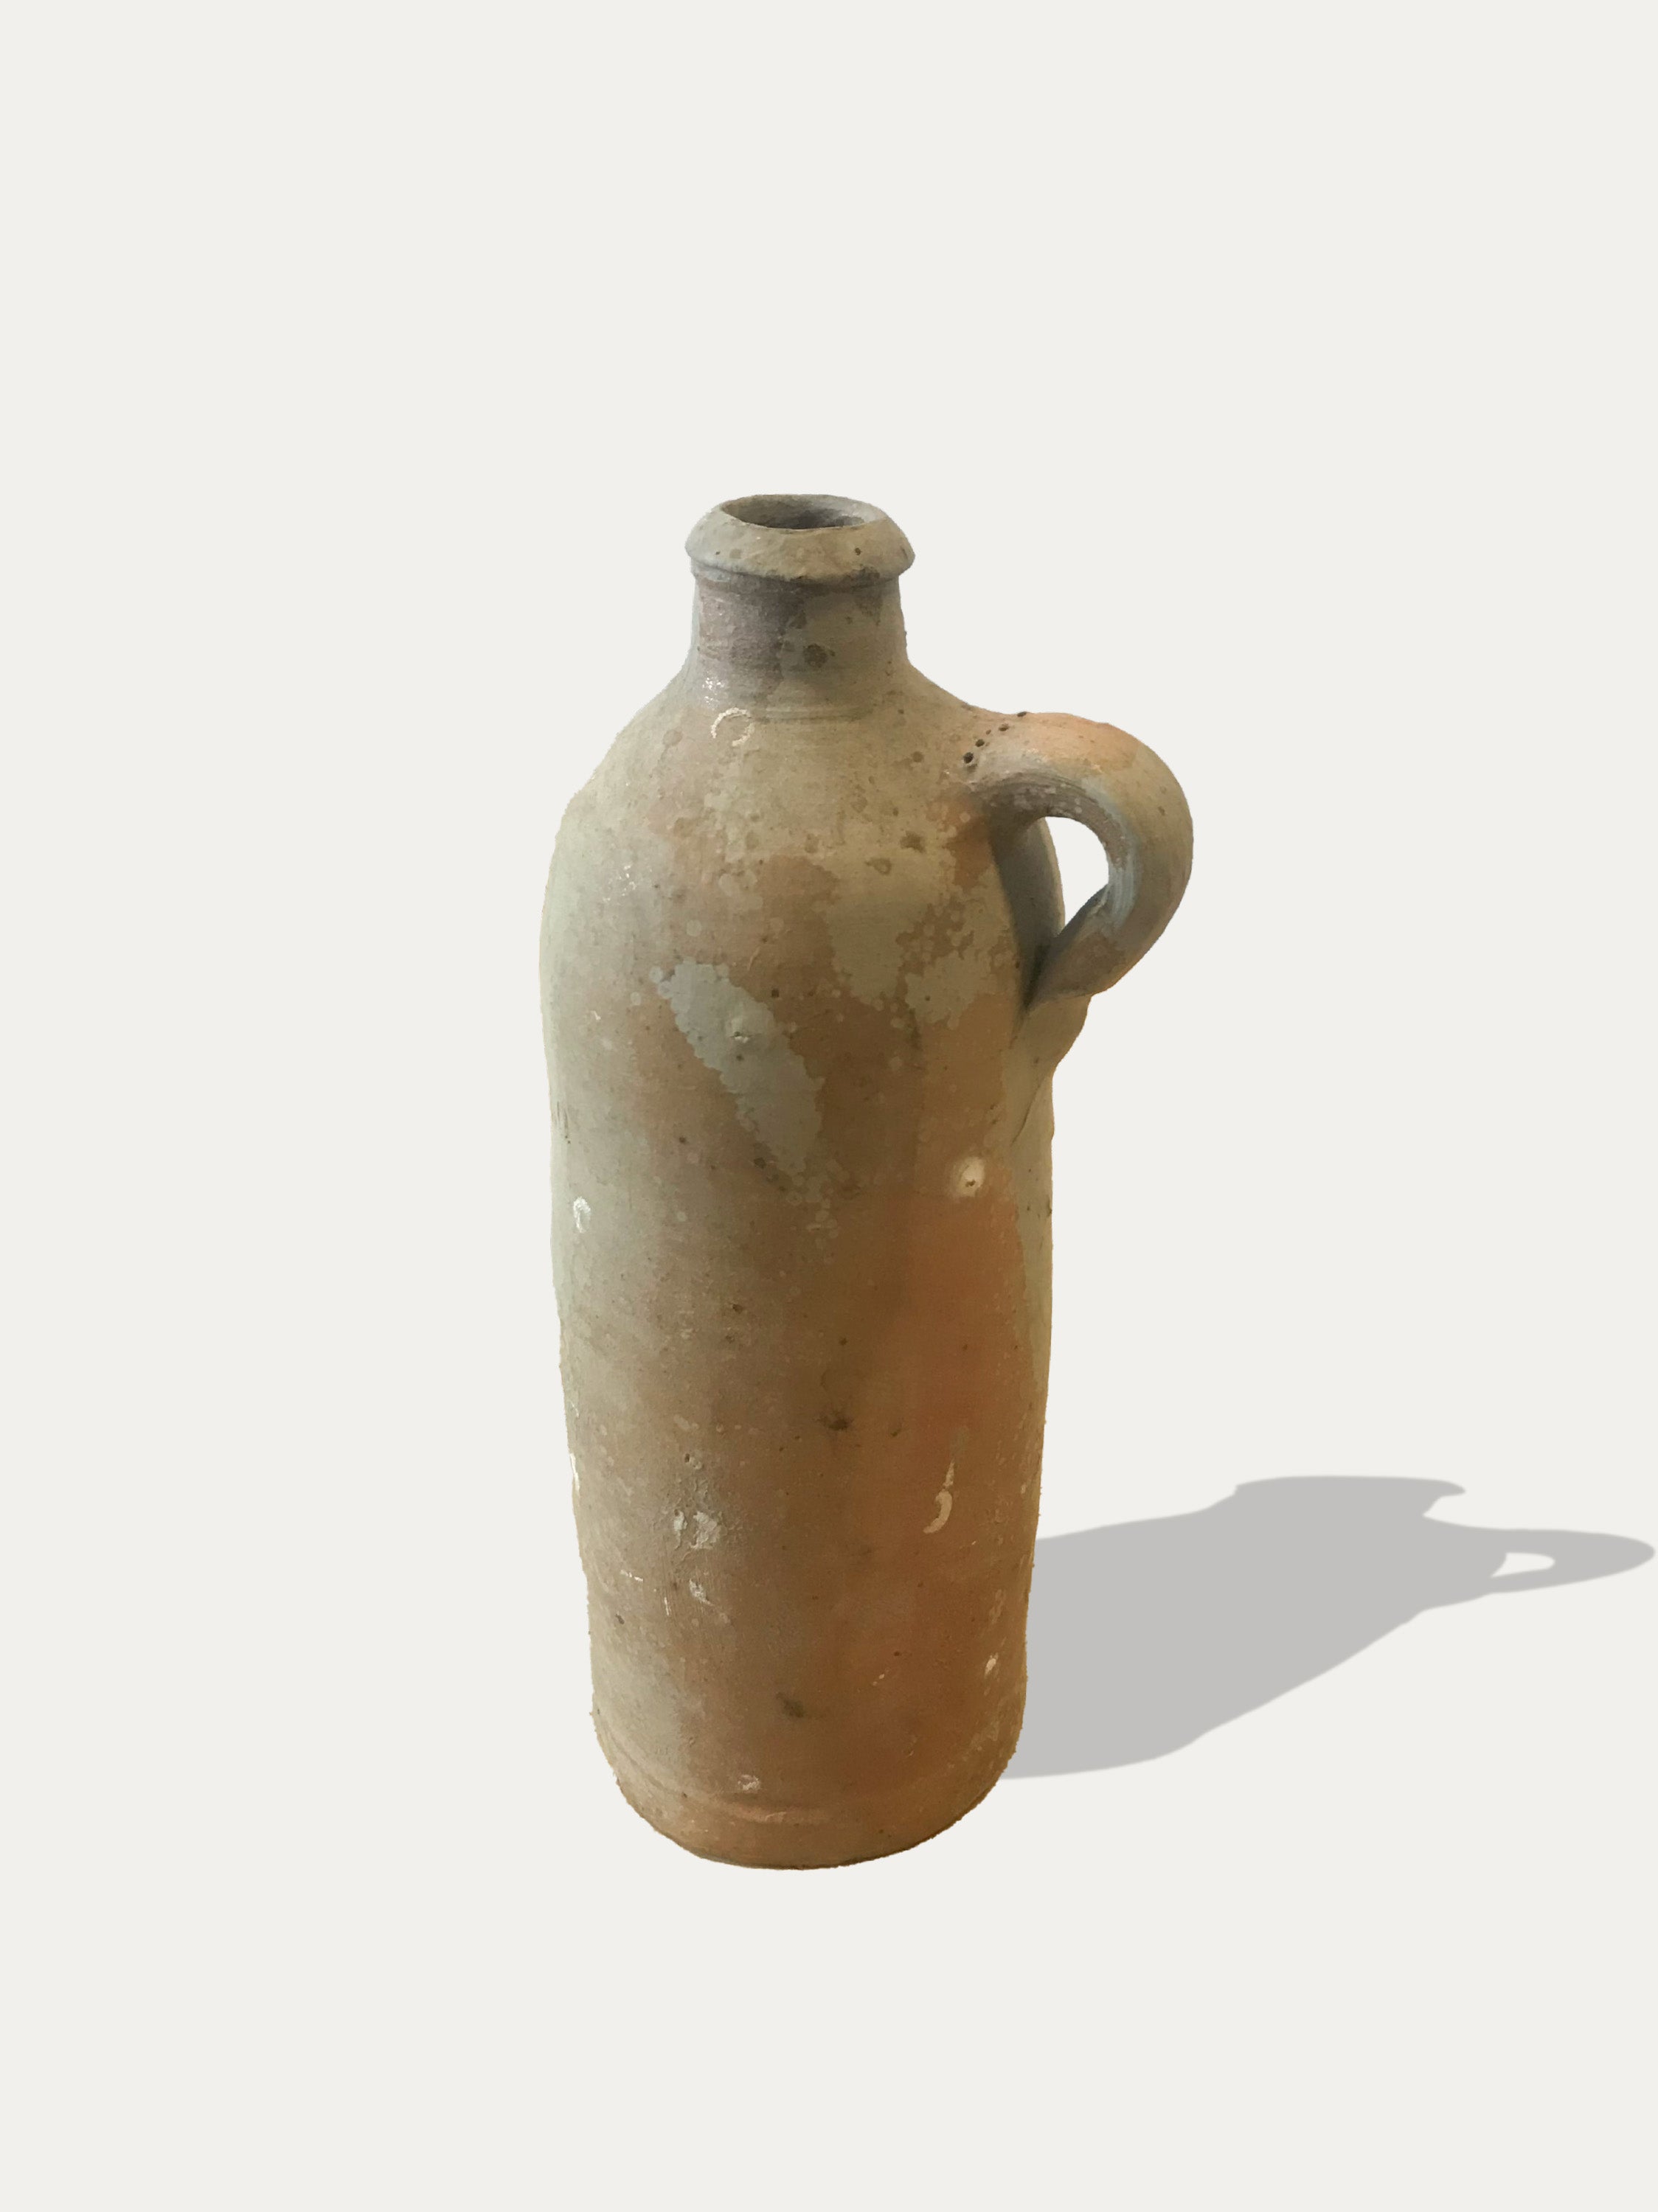 Terracotta Water jug from Borneo - Asian Art from Kirschon